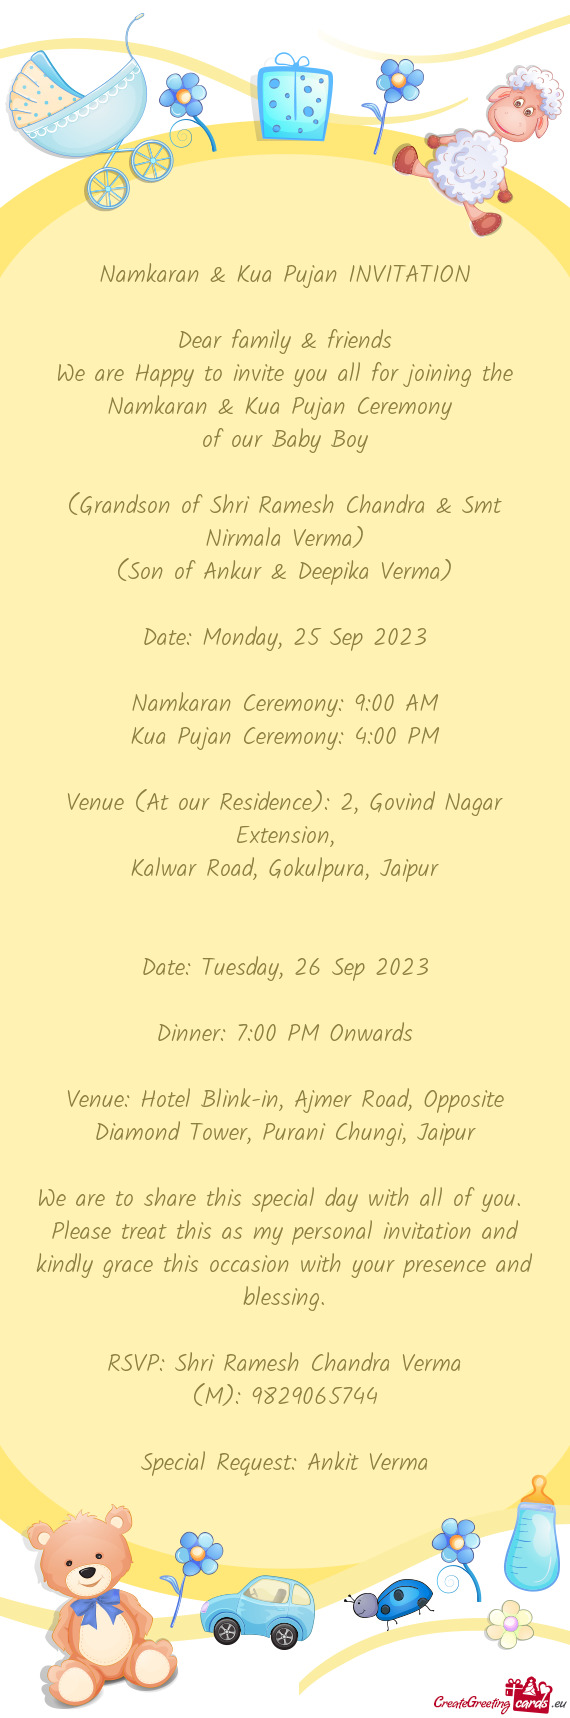 Namkaran & Kua Pujan INVITATION